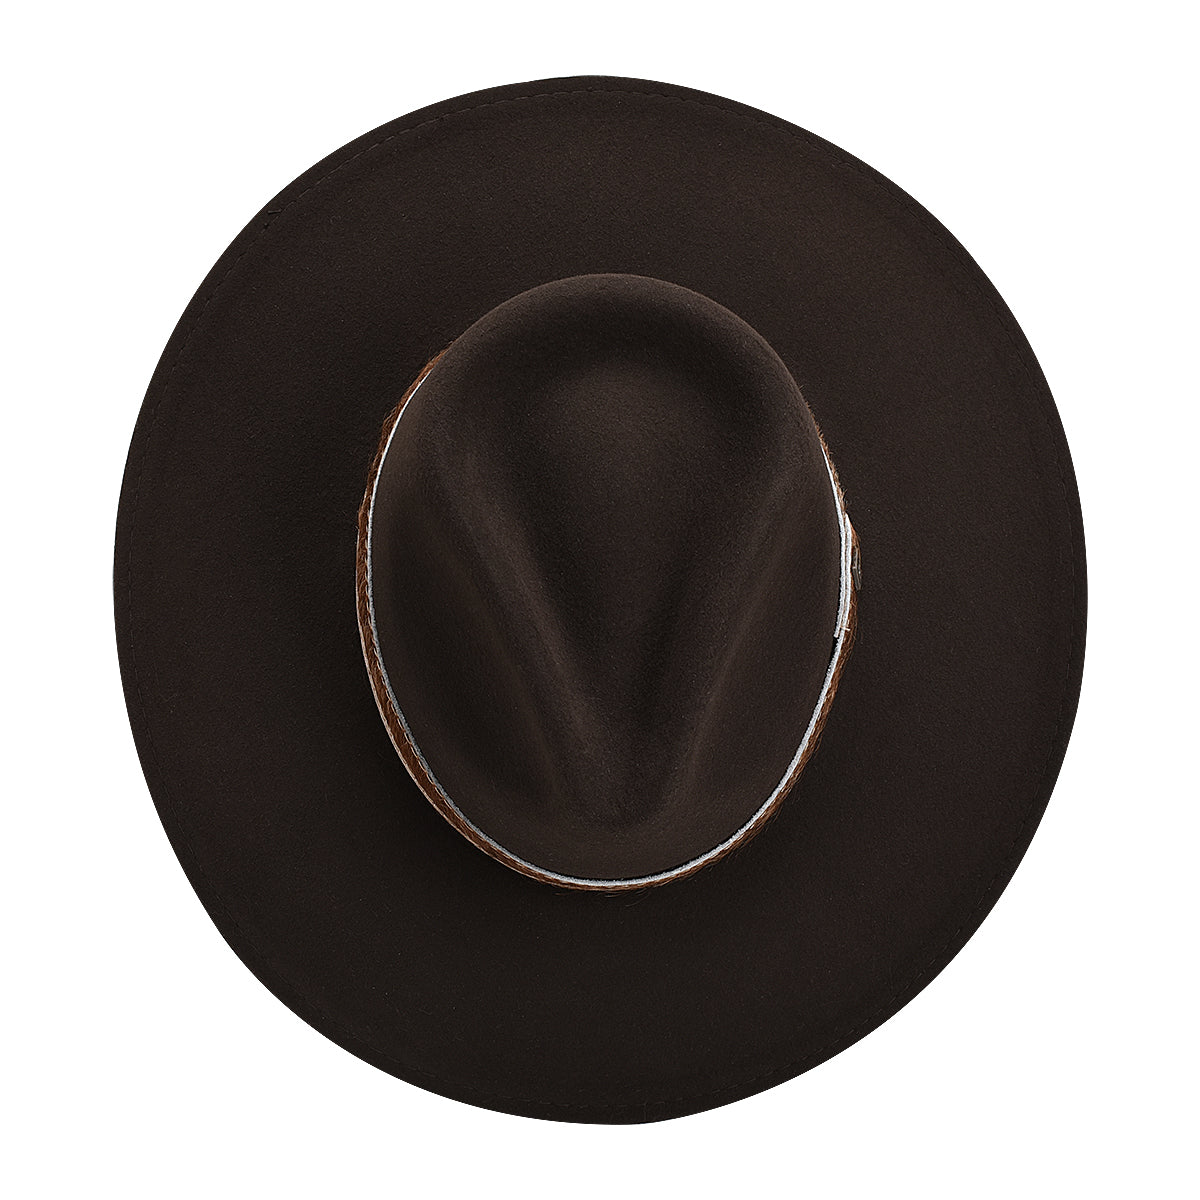 Cuadra brown wool hat with bovine fur leather headband